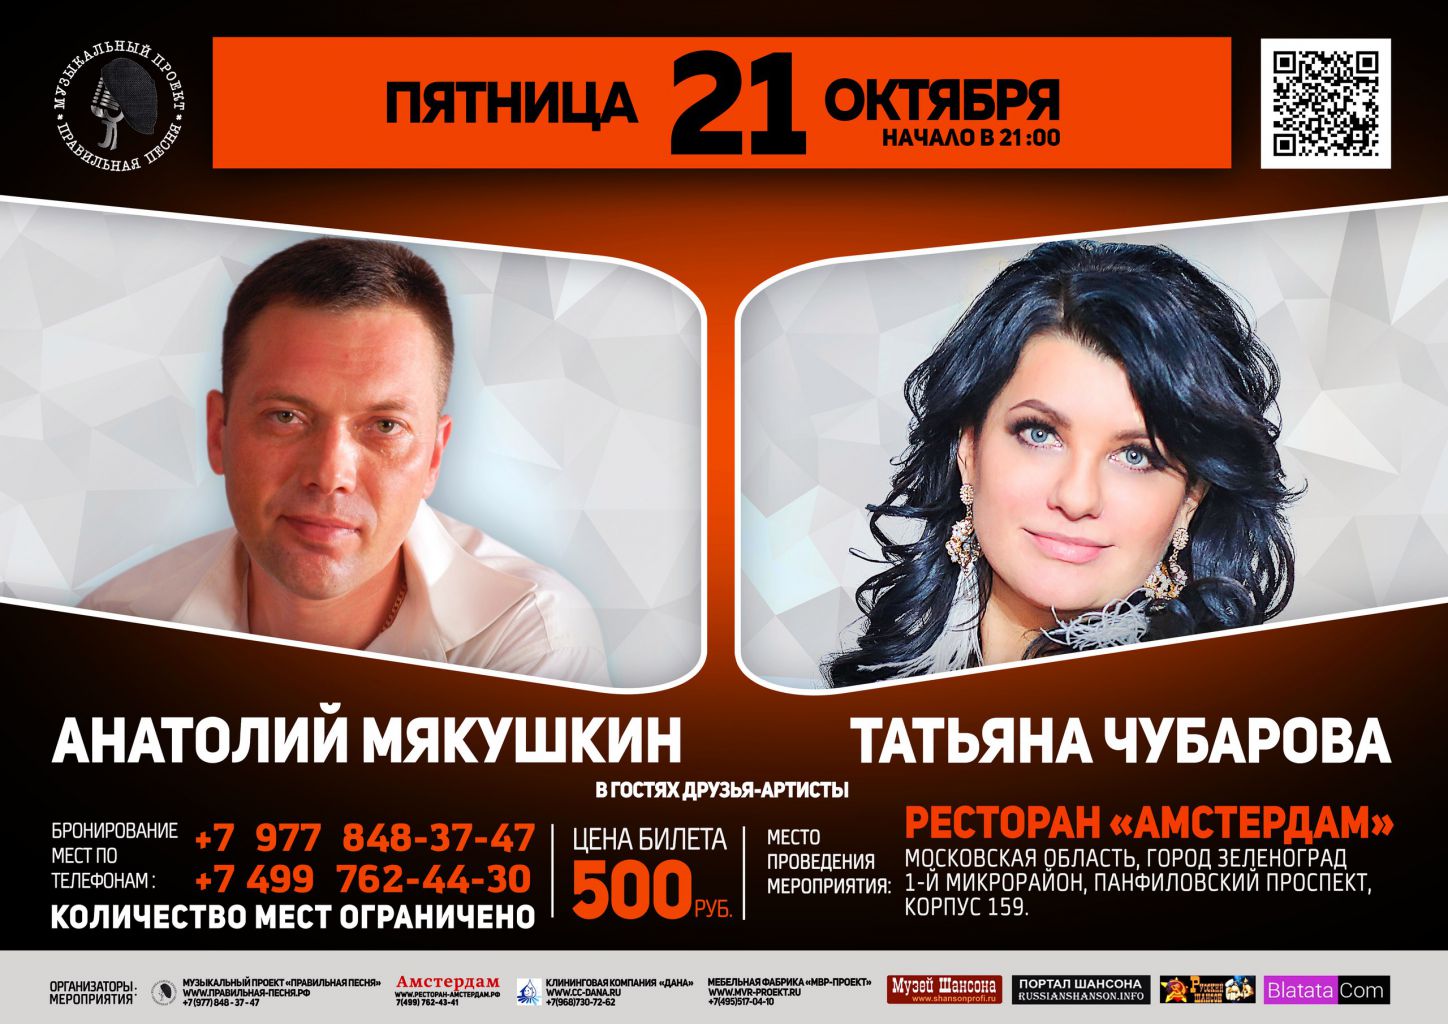 Анатолий Мякушкин и Татьяна Чубарова г.Зеленоград 21 октября 2016 года